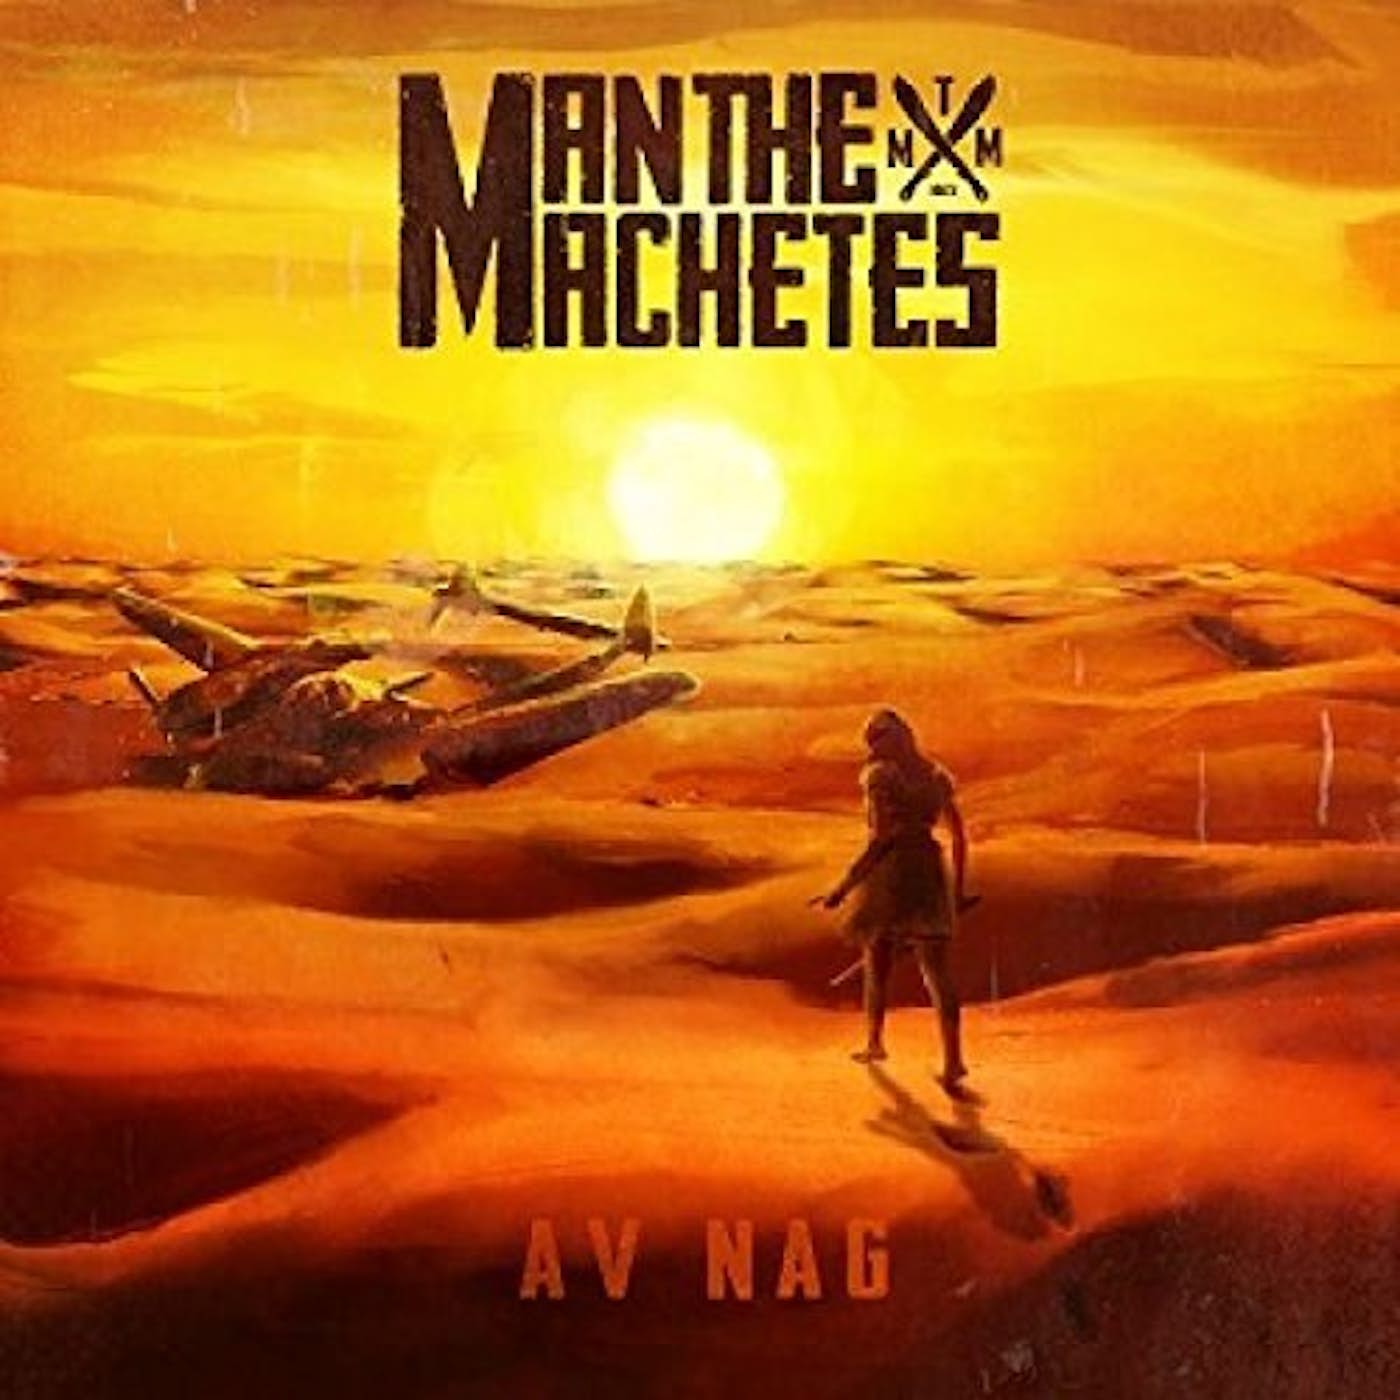 Man The Machetes AV NAG CD